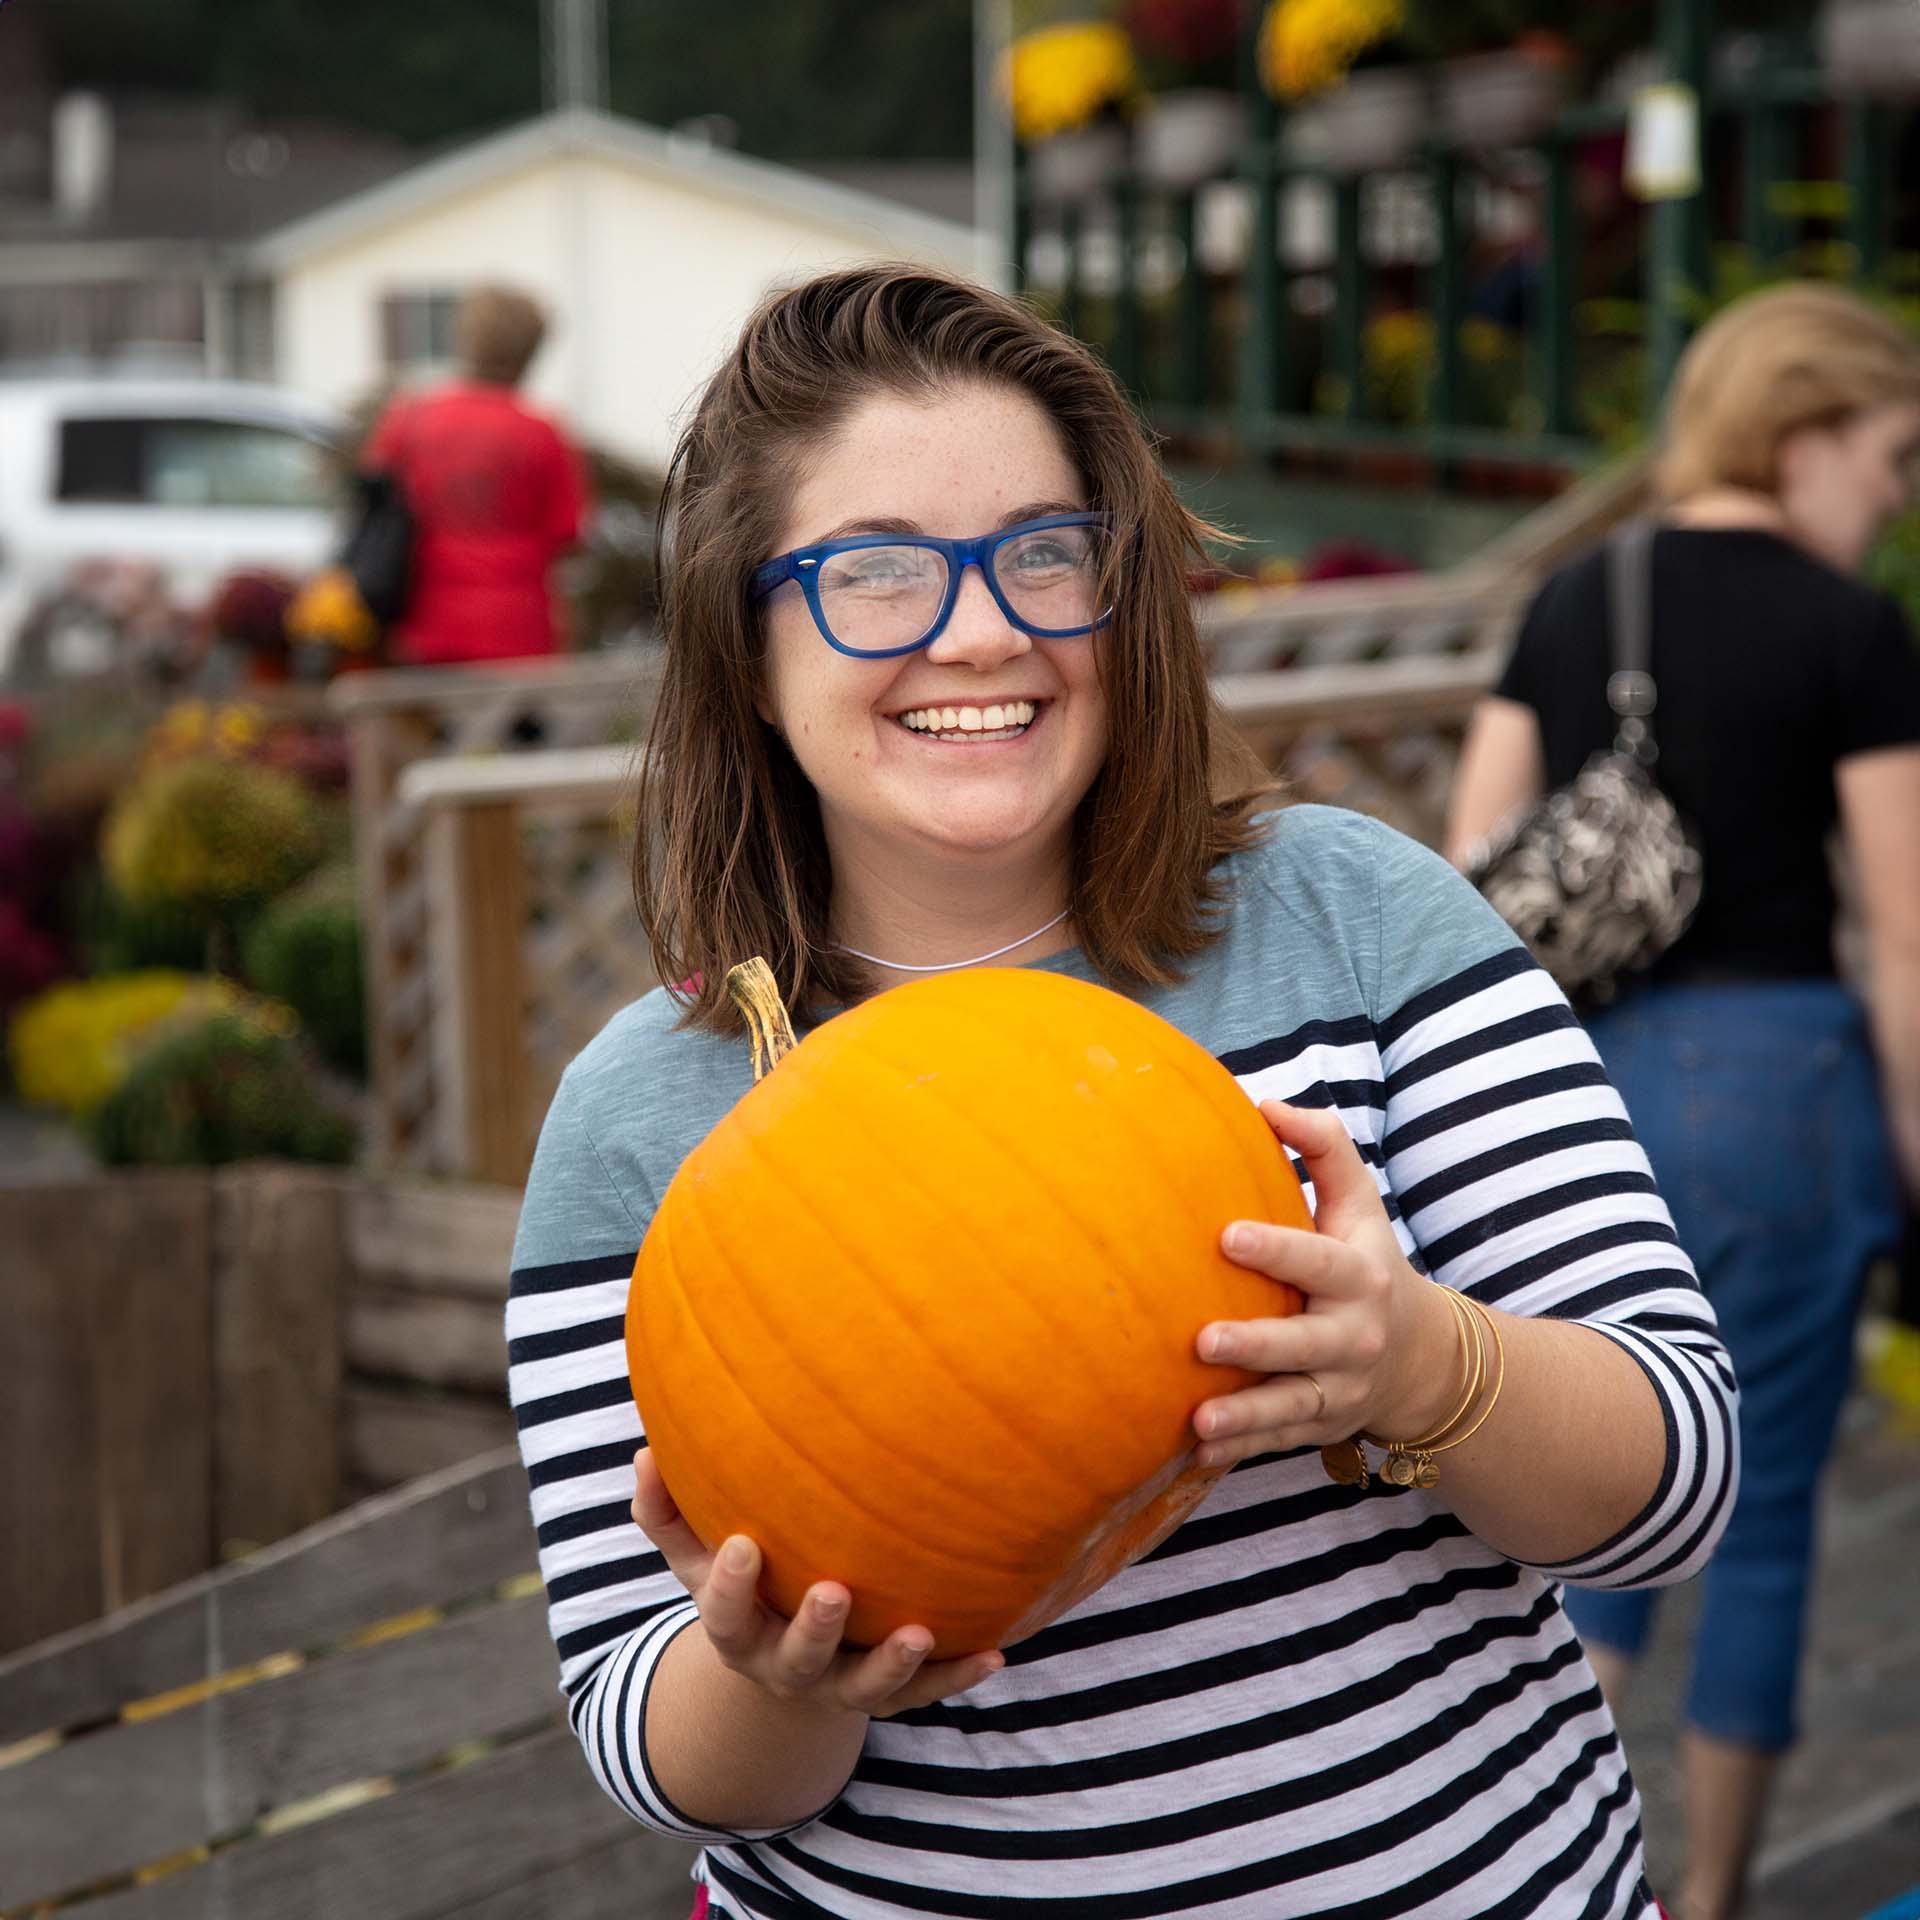 A person holding a pumpkin.